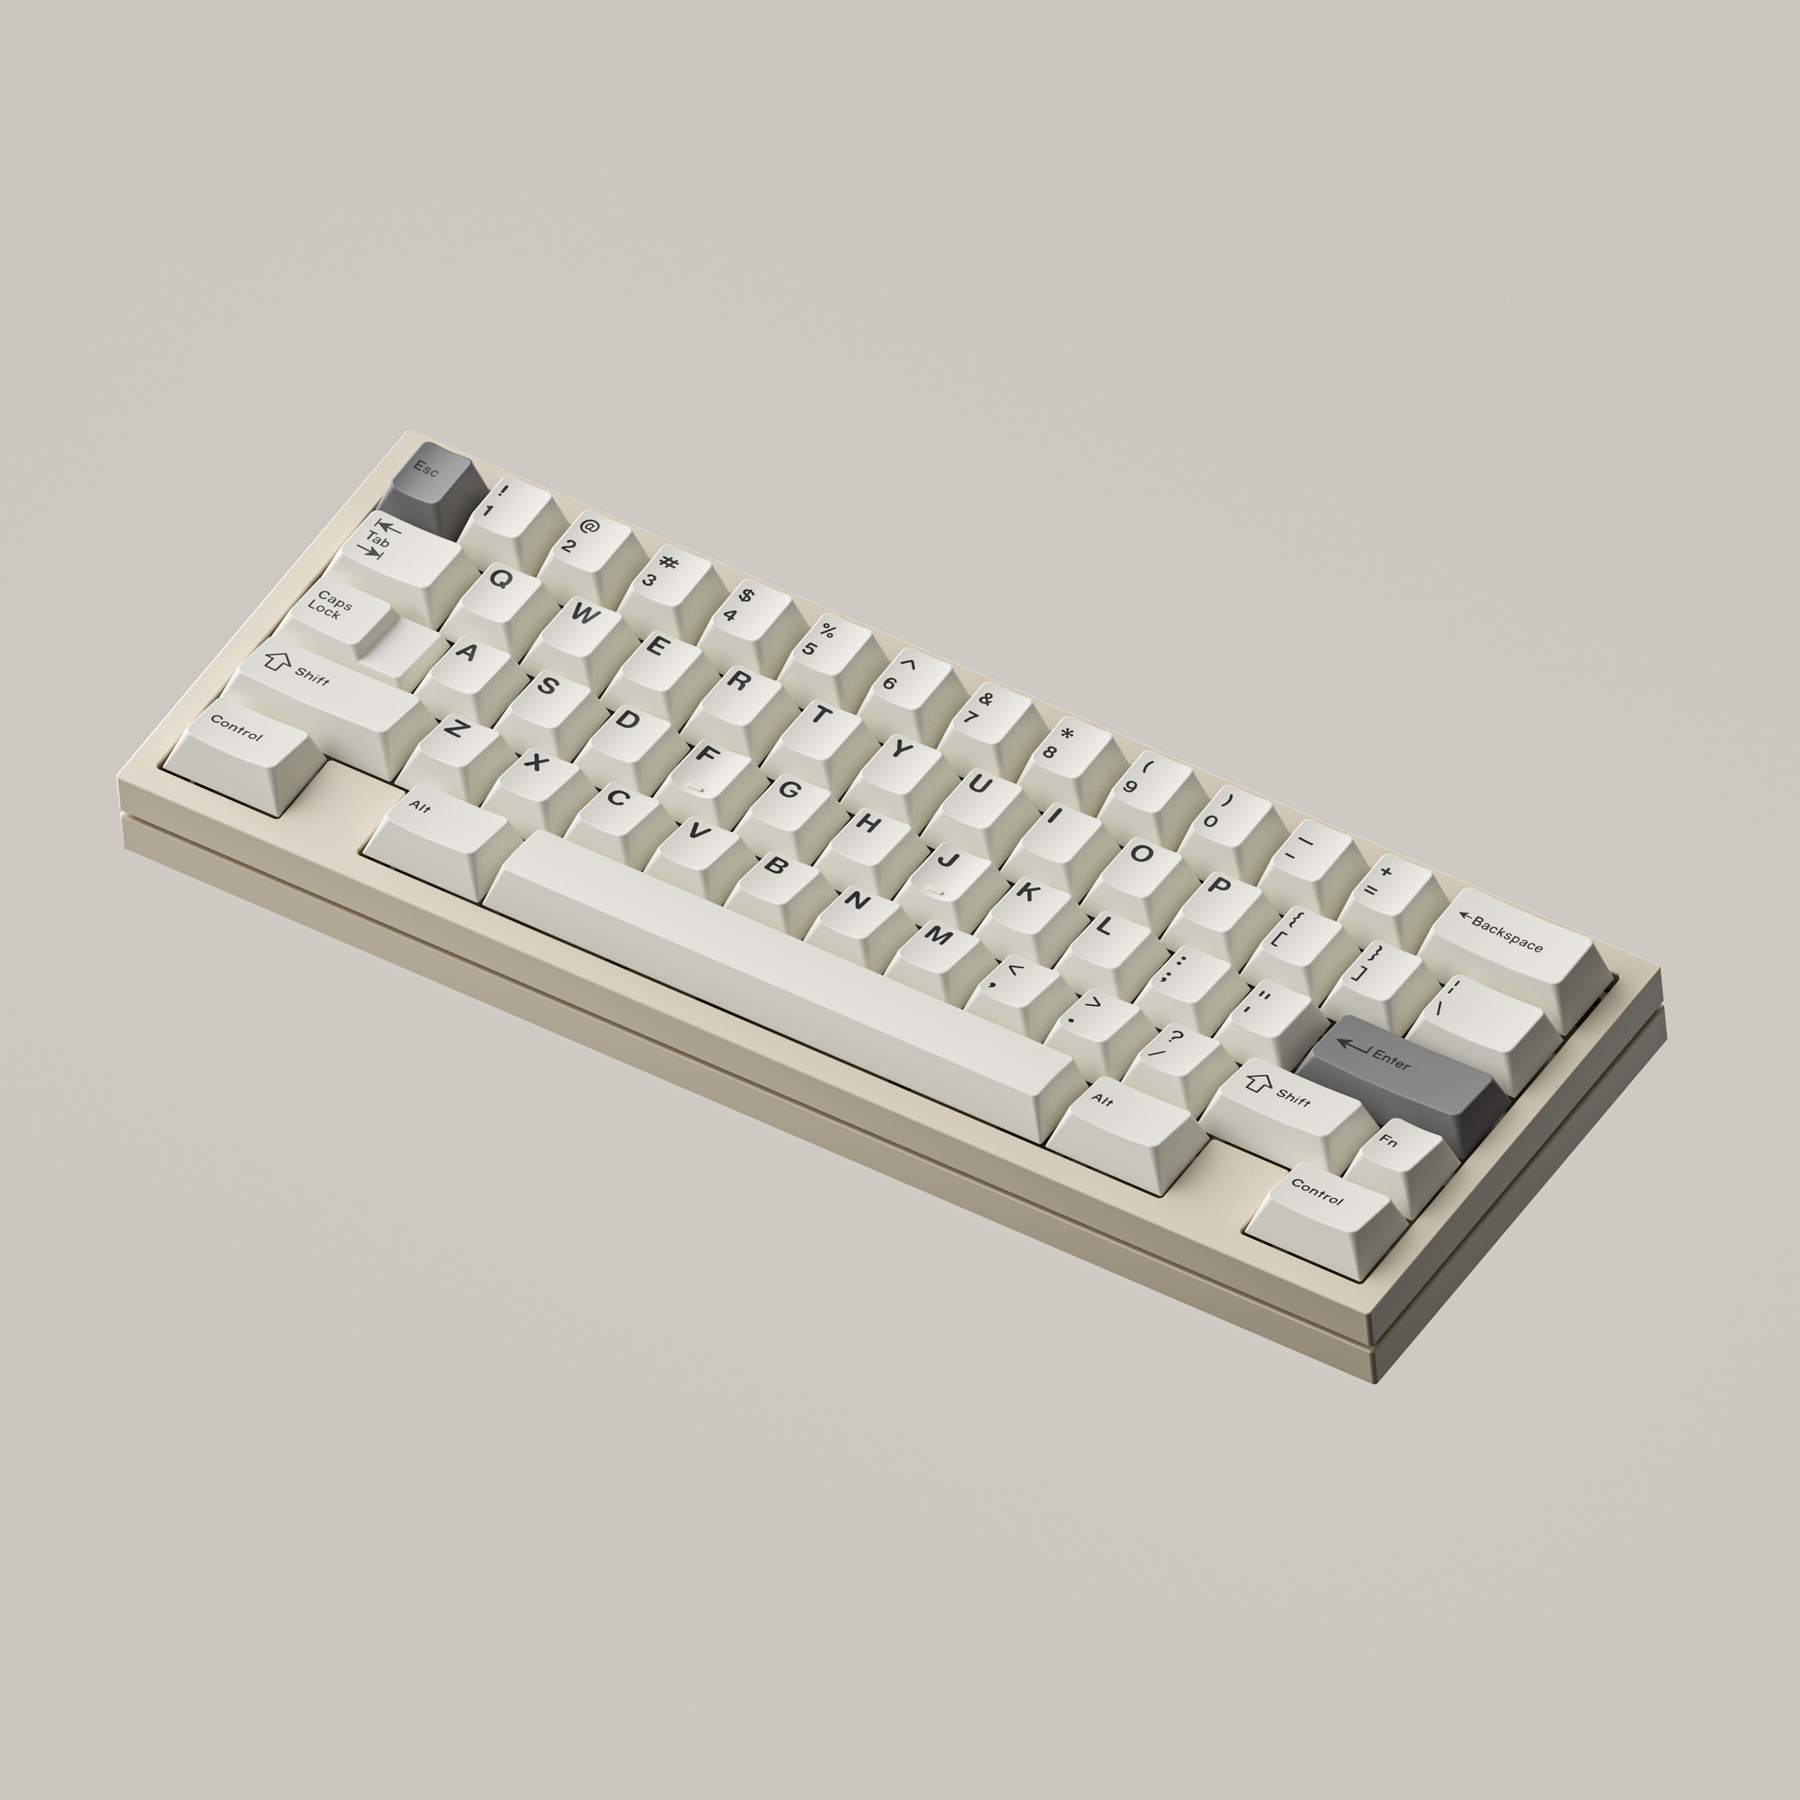 [GB] Flame60 Keyboard Kit